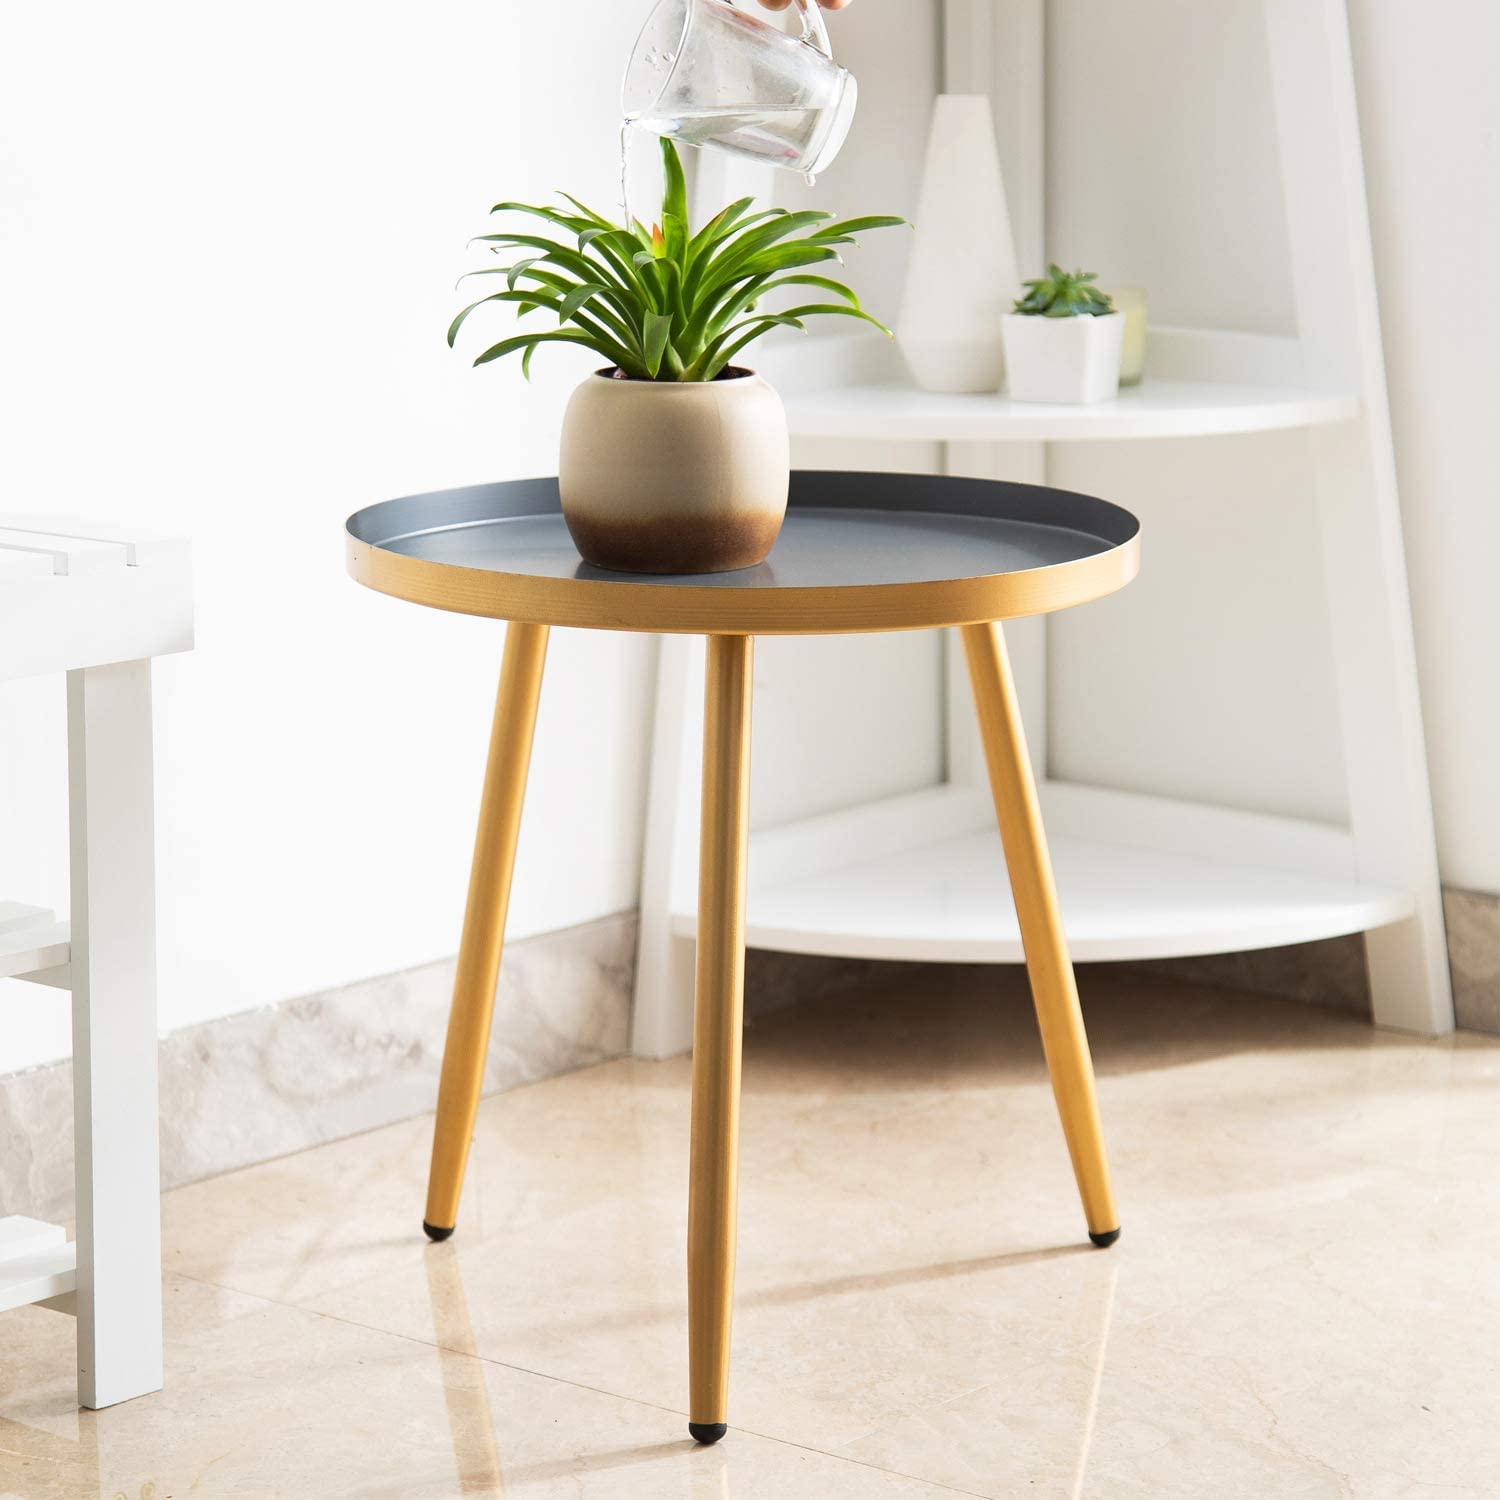 Round Side Metal Table, Tea Sofa Table for Living Room Bedroom,Anti-Rust and Waterproof, Black - image 4 of 8